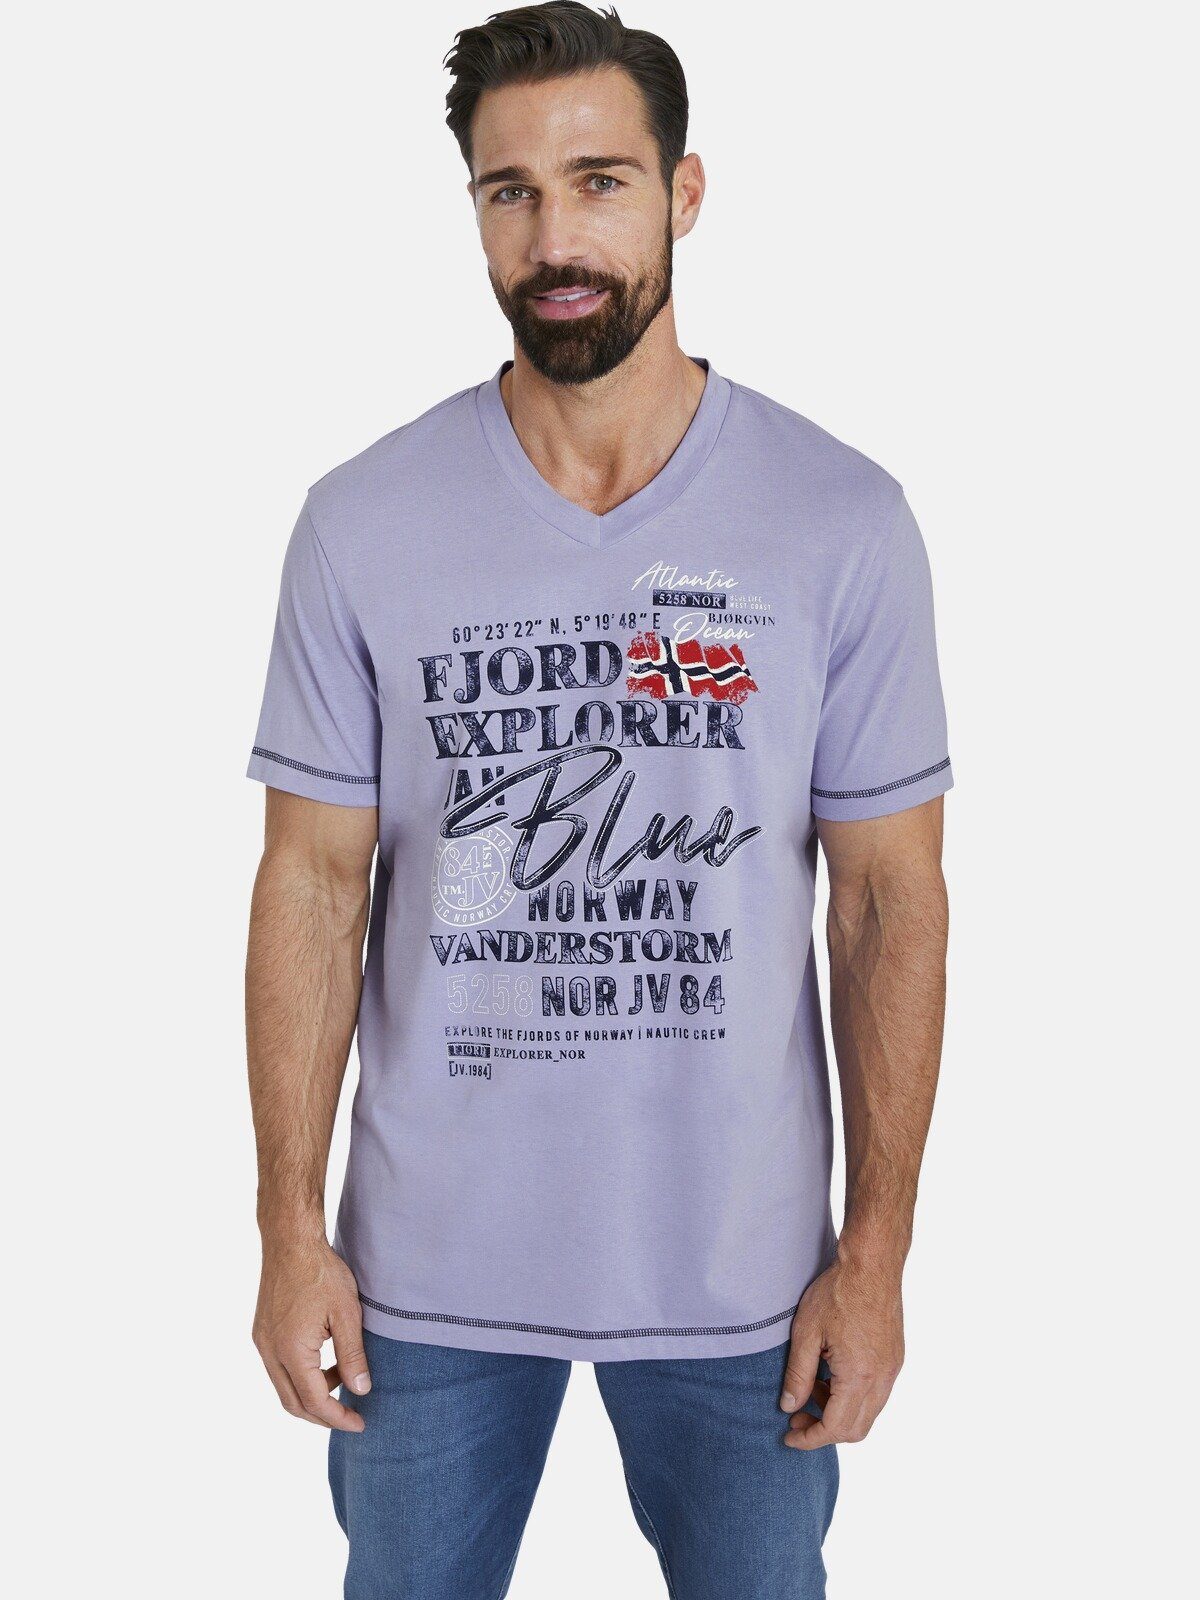 Jan Vanderstorm T-Shirt NORDGER aus reiner Baumwolle helllila | V-Shirts